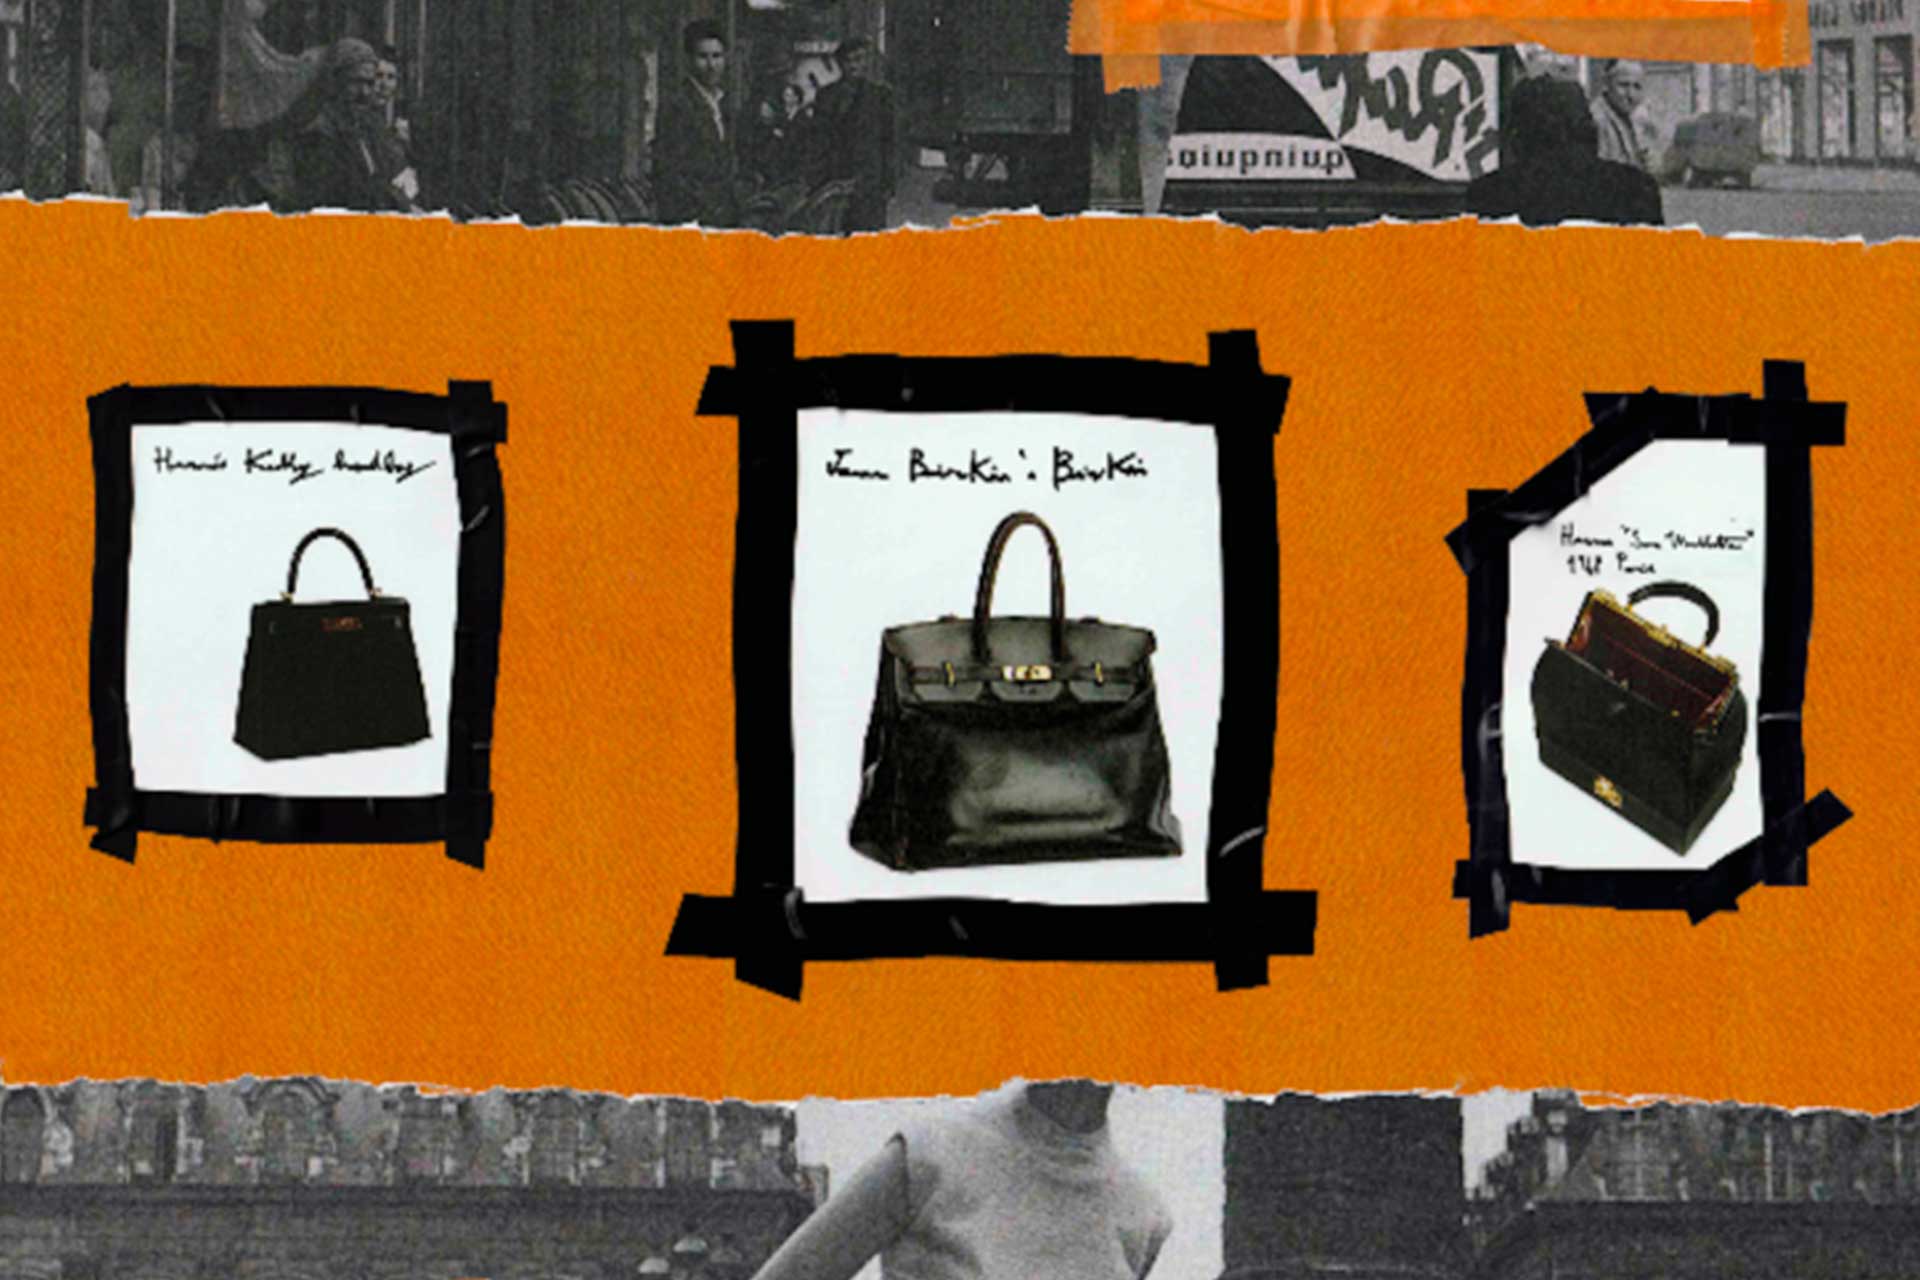 Louis Vuitton Cross body bags - Lampoo